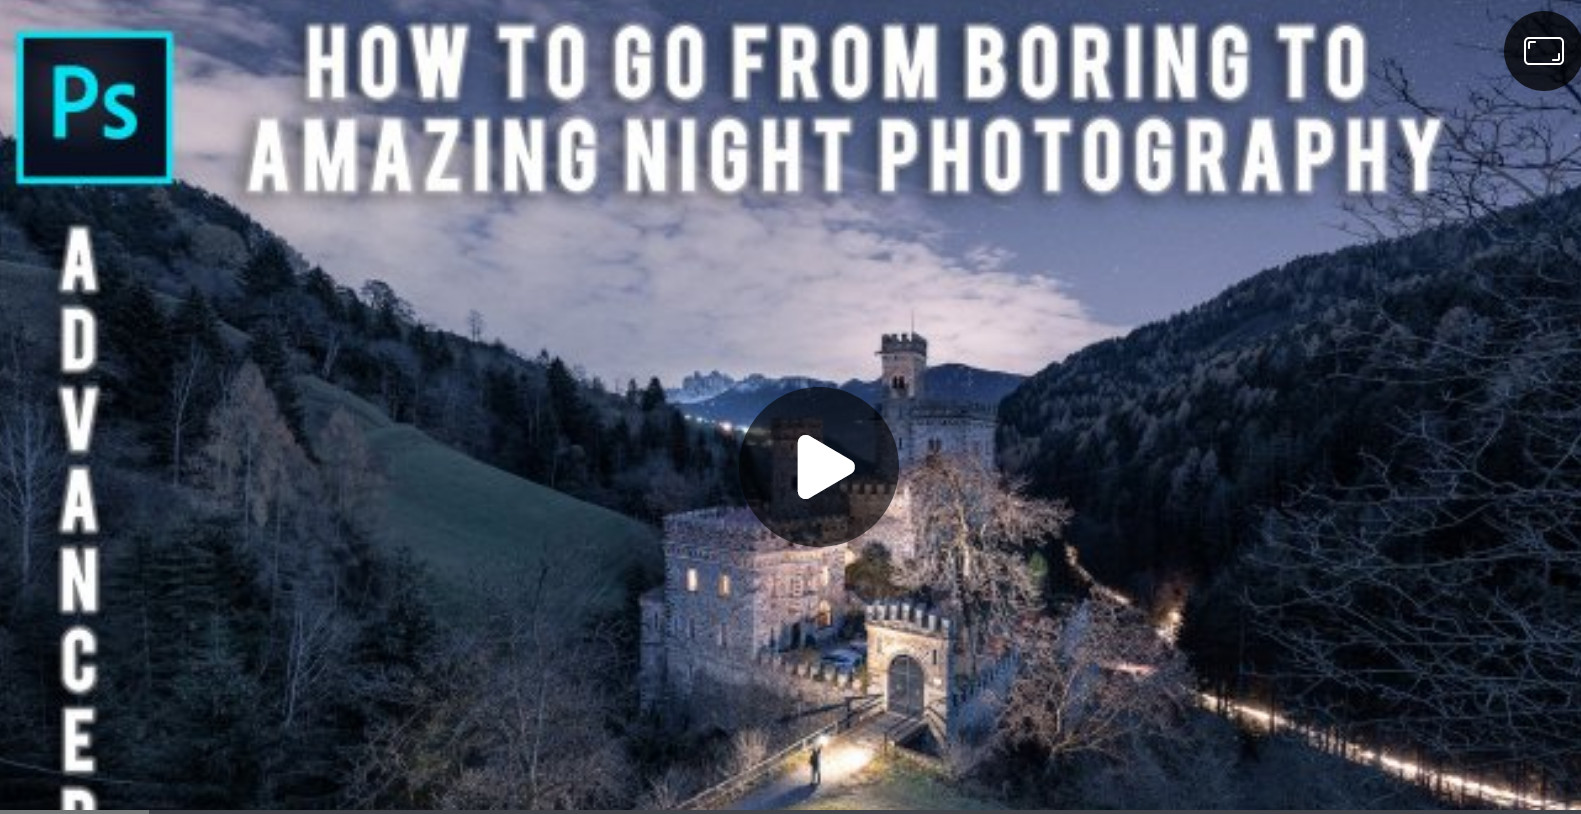 Skillshare – Photoshop Advanced: How to go from Boring to Amazing Night Photography